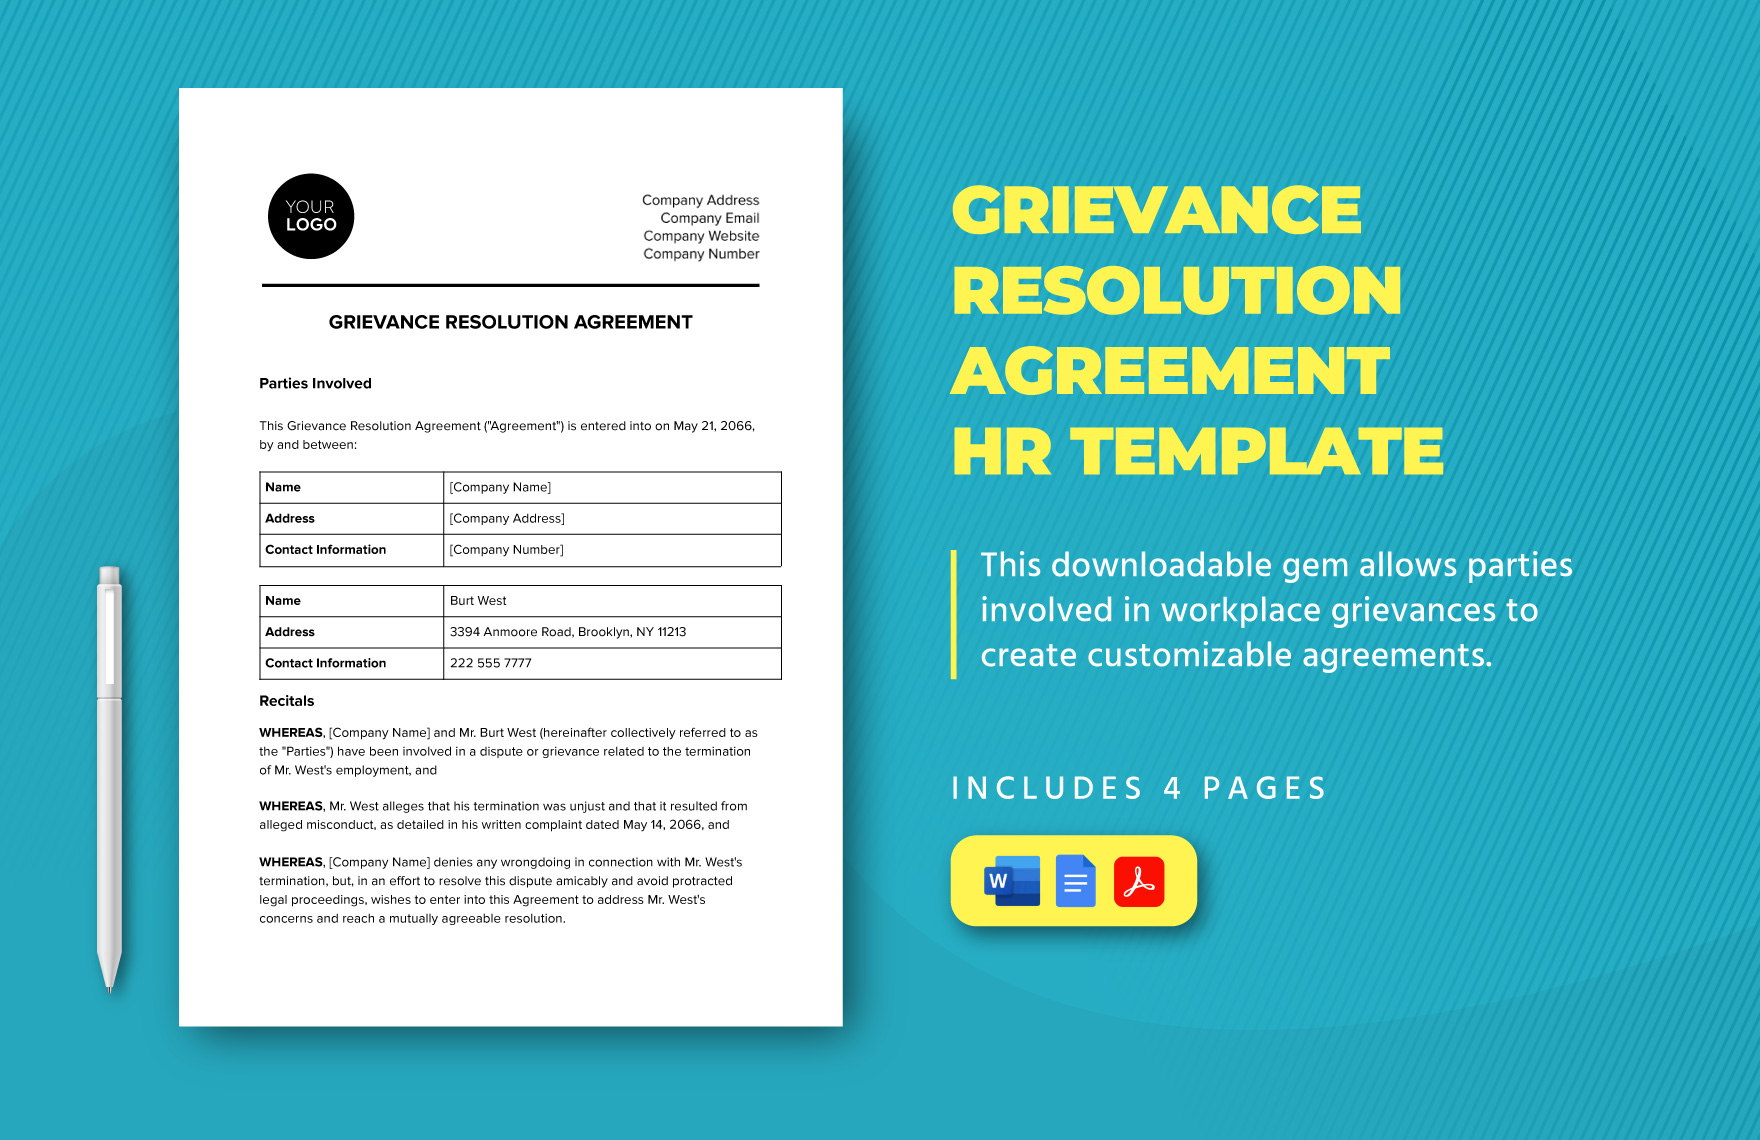 Grievance Resolution Agreement HR Template